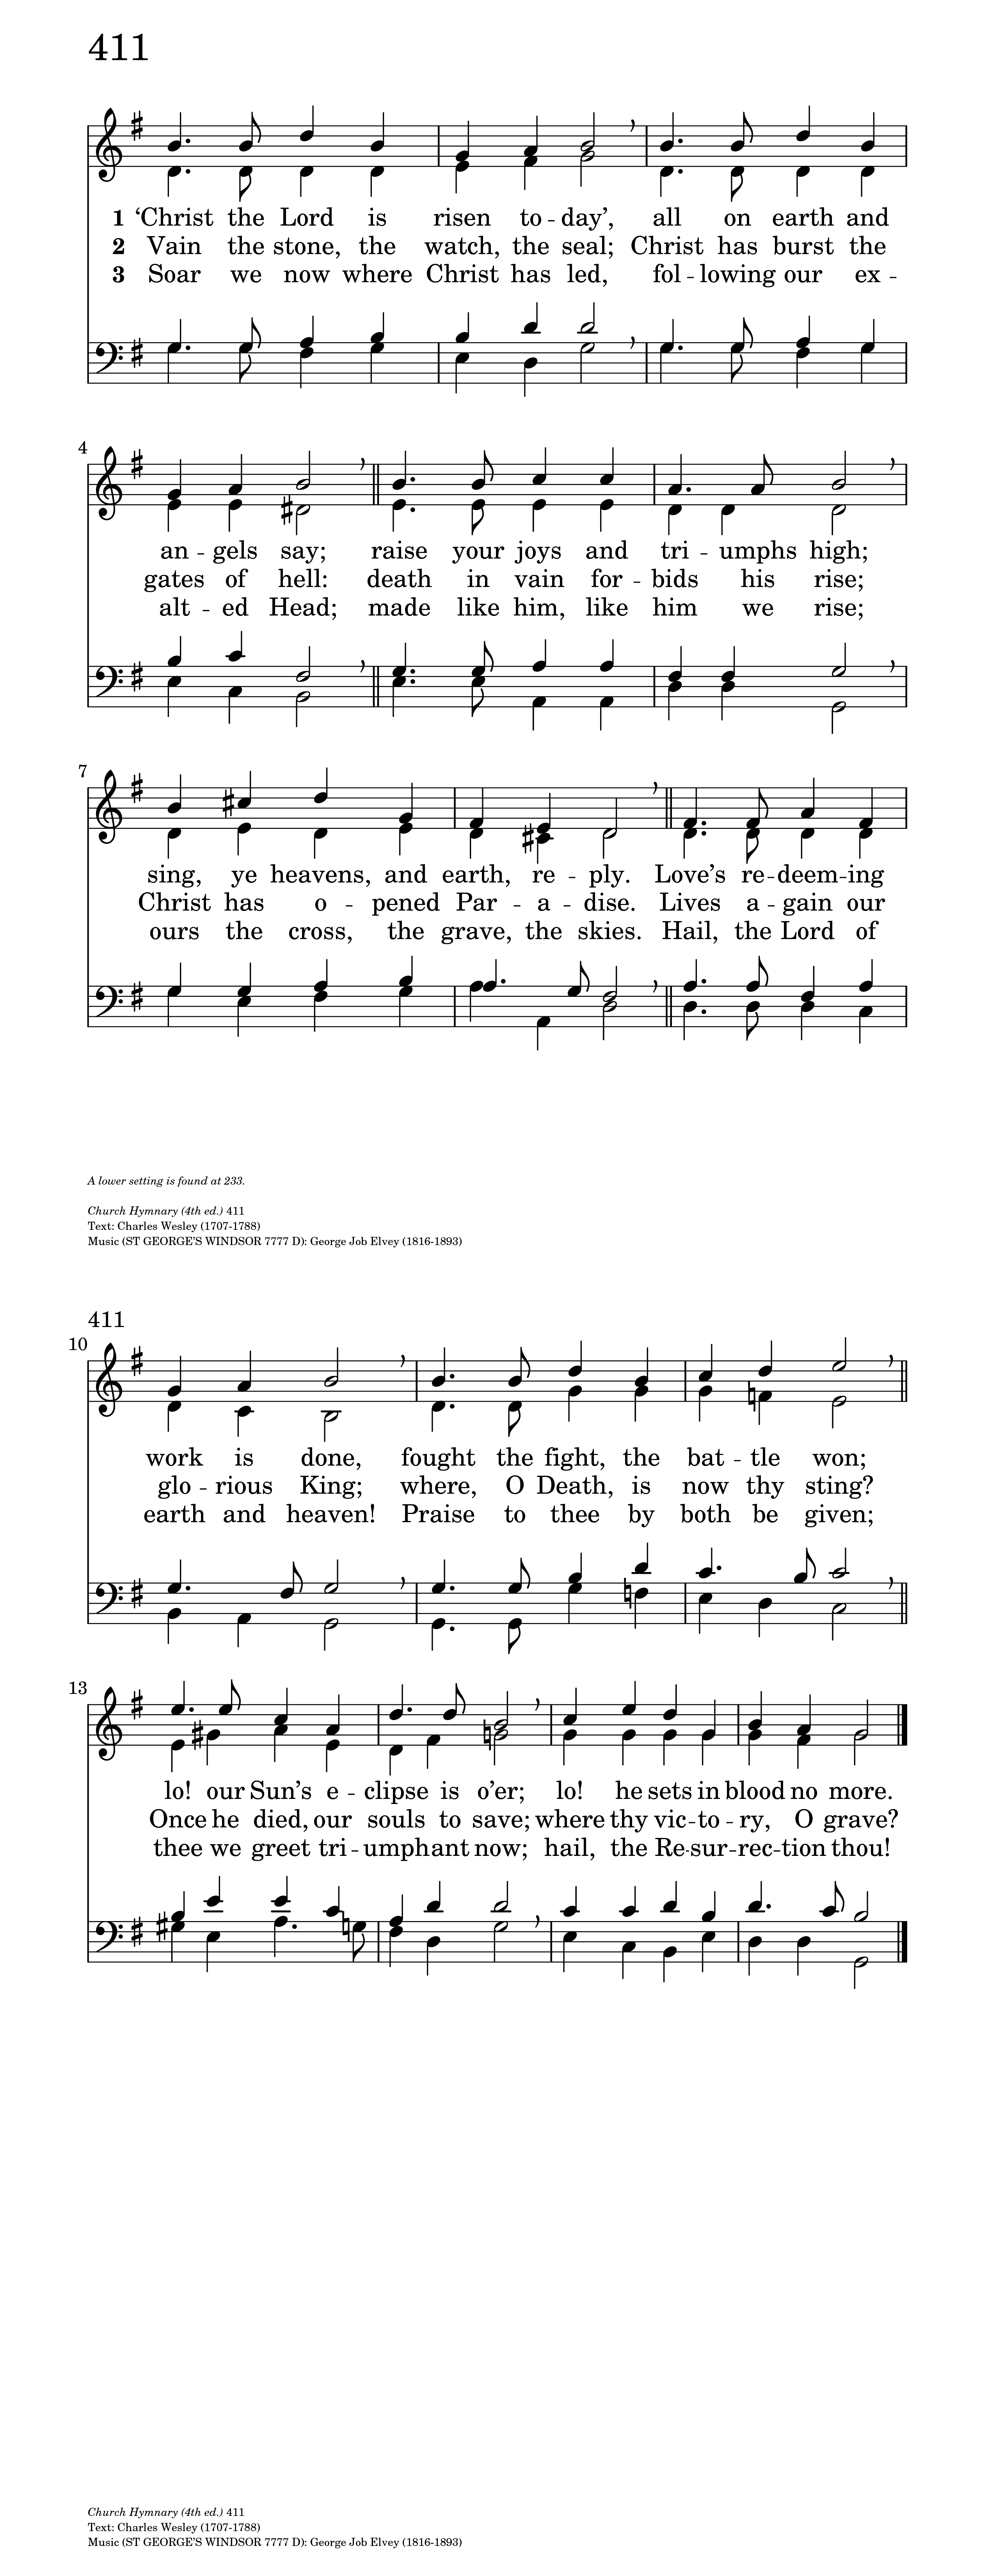 Songs for the Social LYRICS Sheet 302 USA American Lutheran